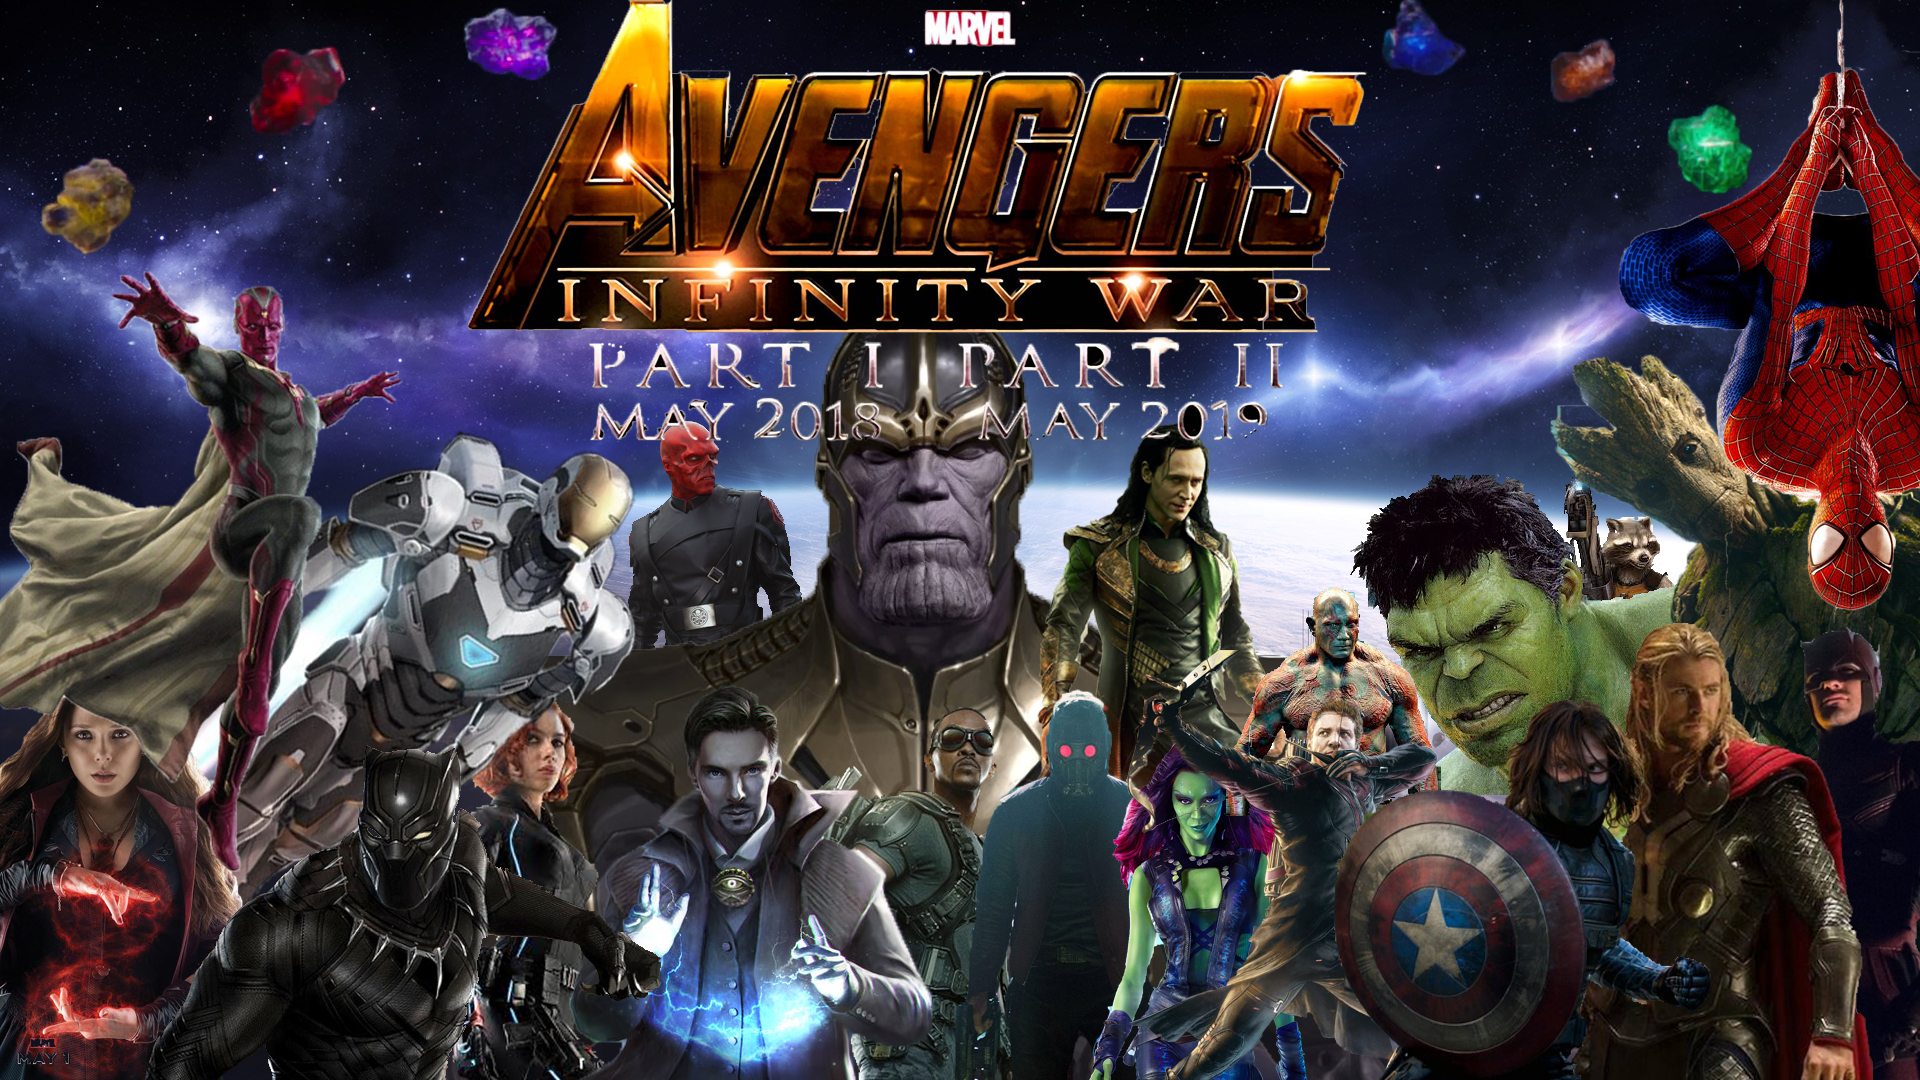 The Avengers 3: Infinity War Part 1